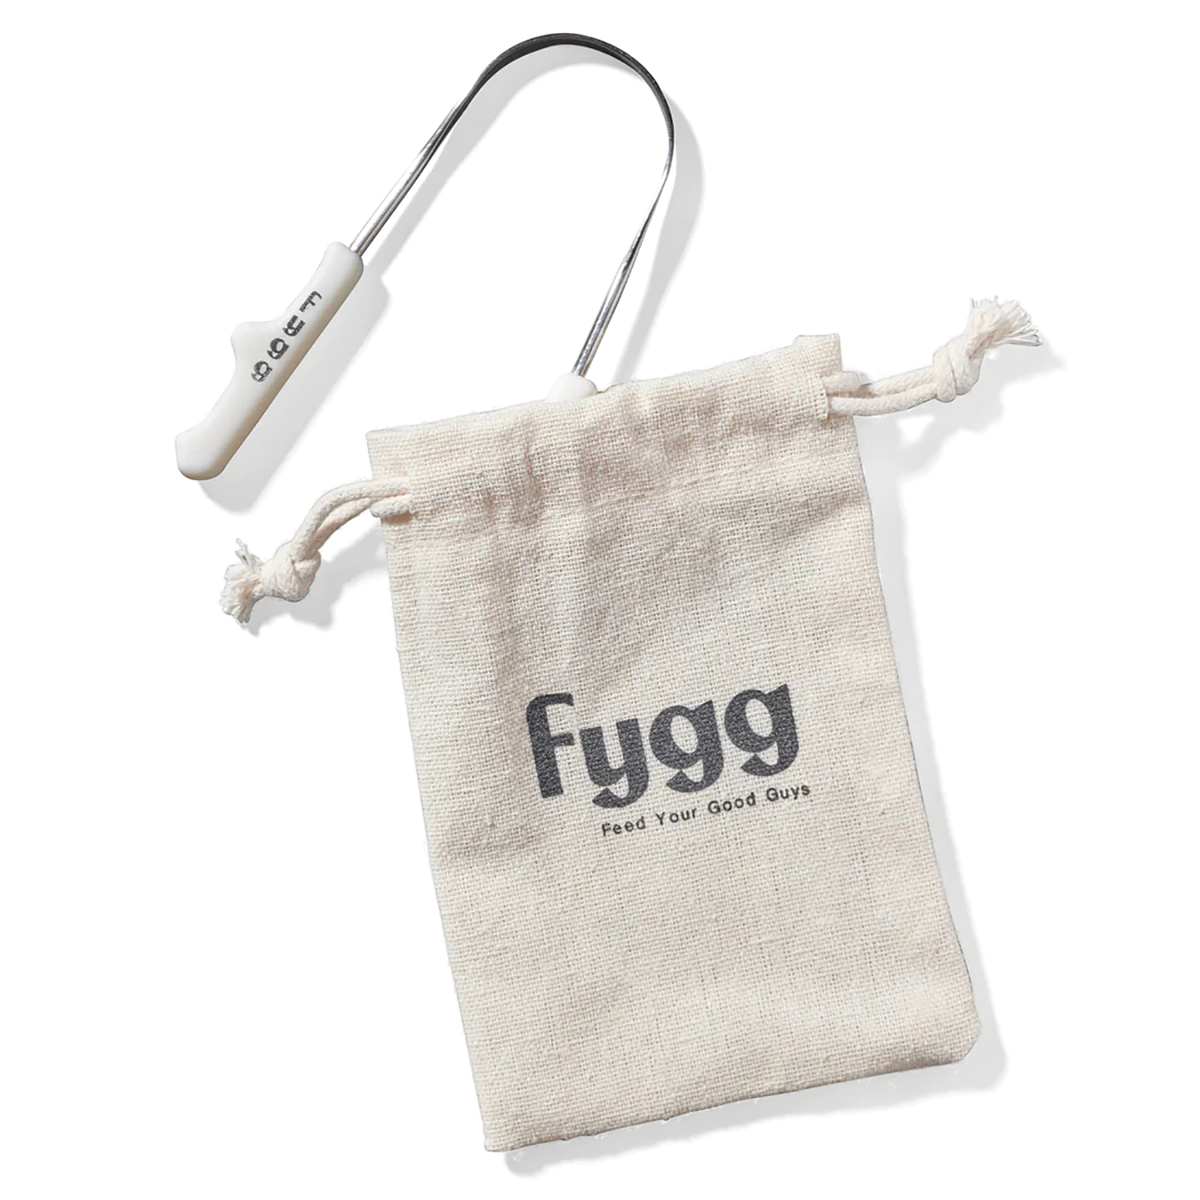 Fygg Tongue Scraper With Holder Bag